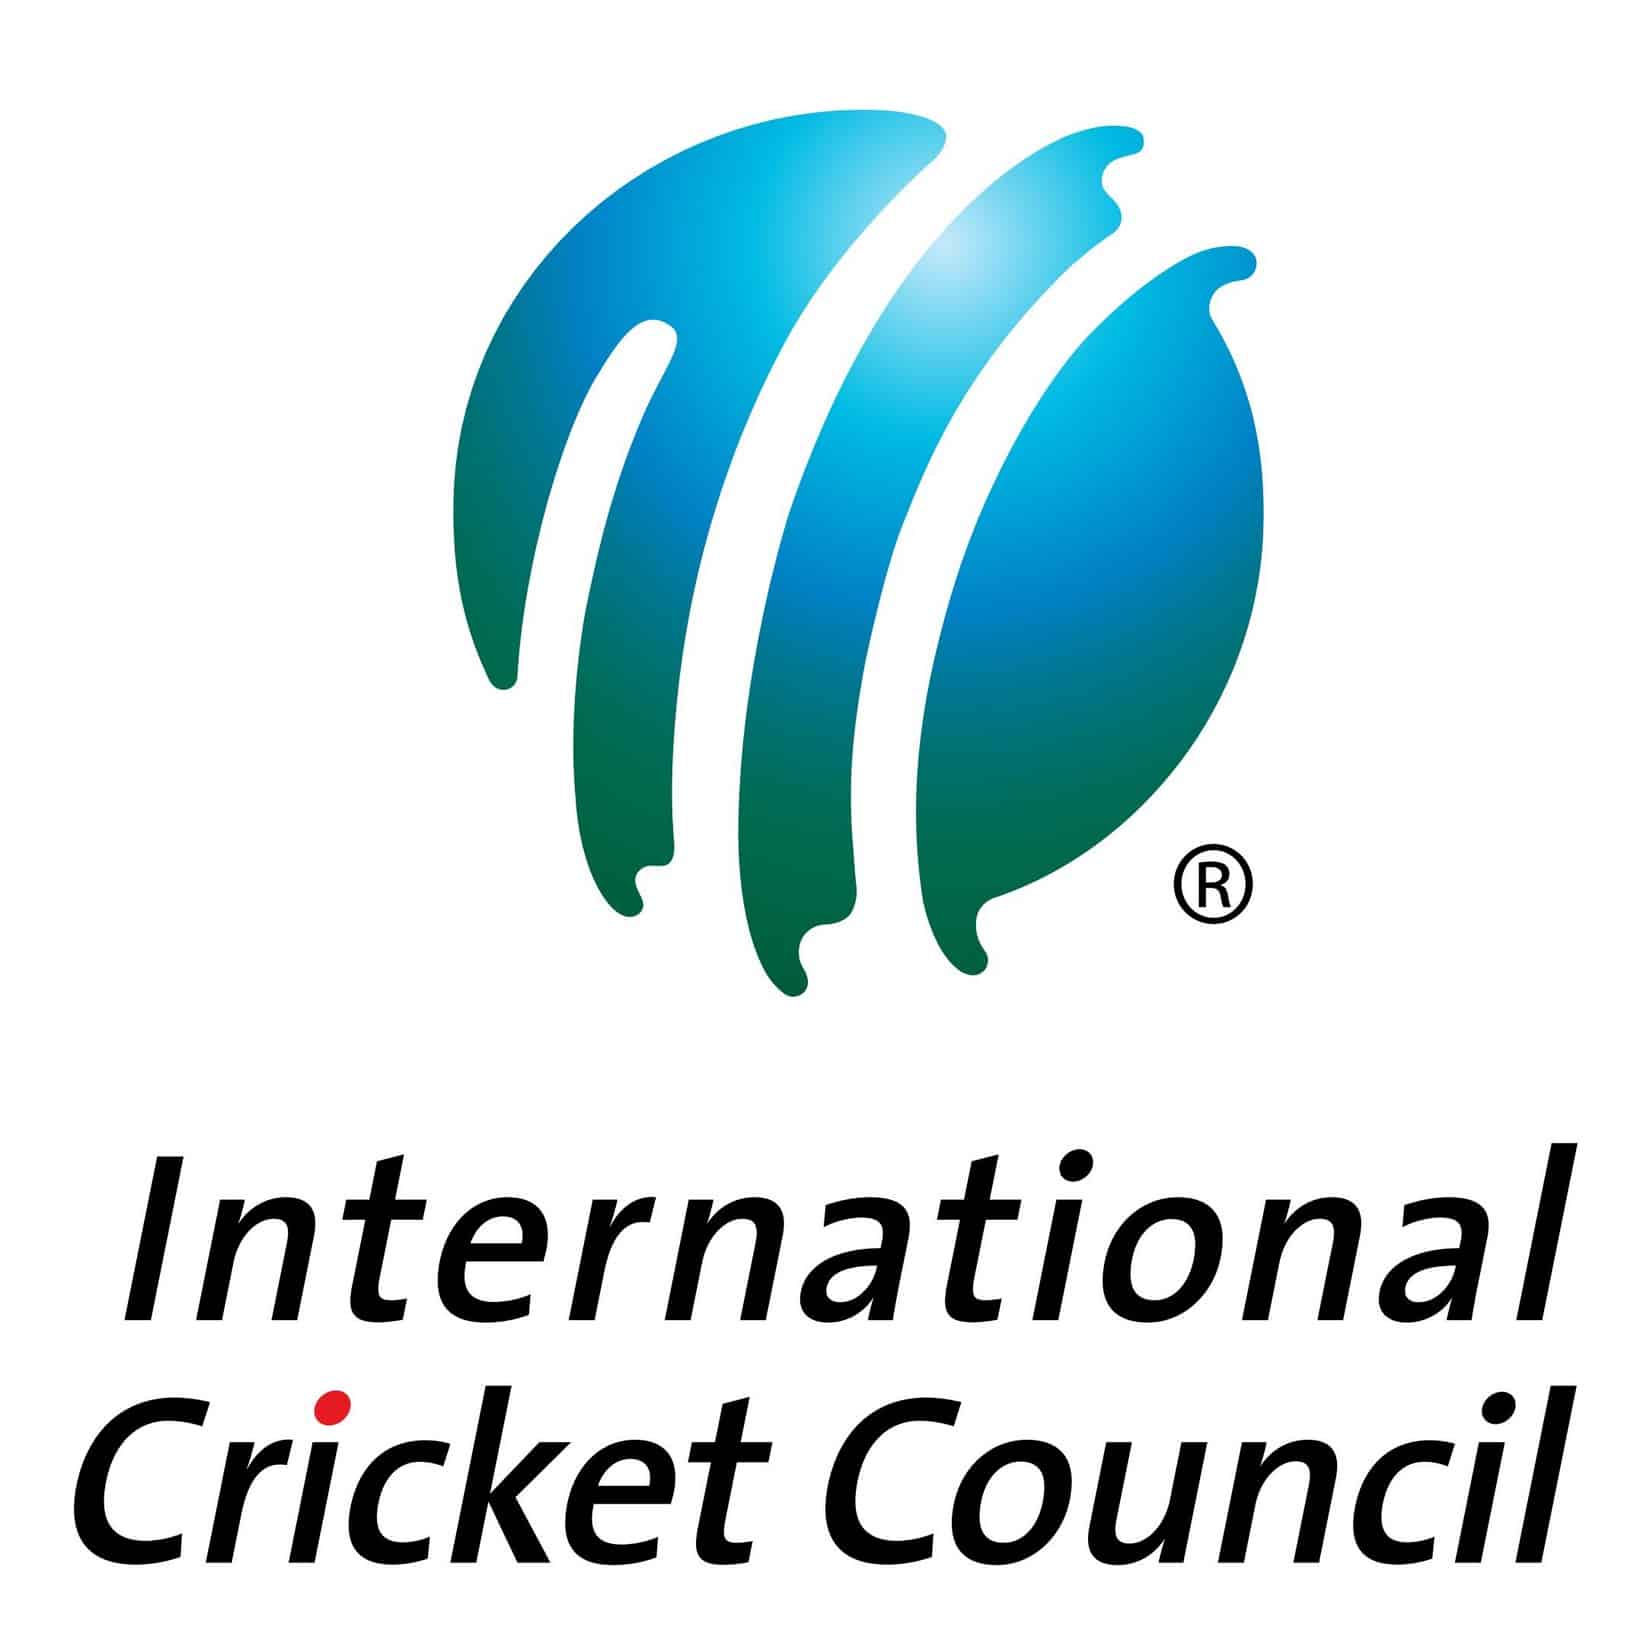 ICC International Cricket Council logo